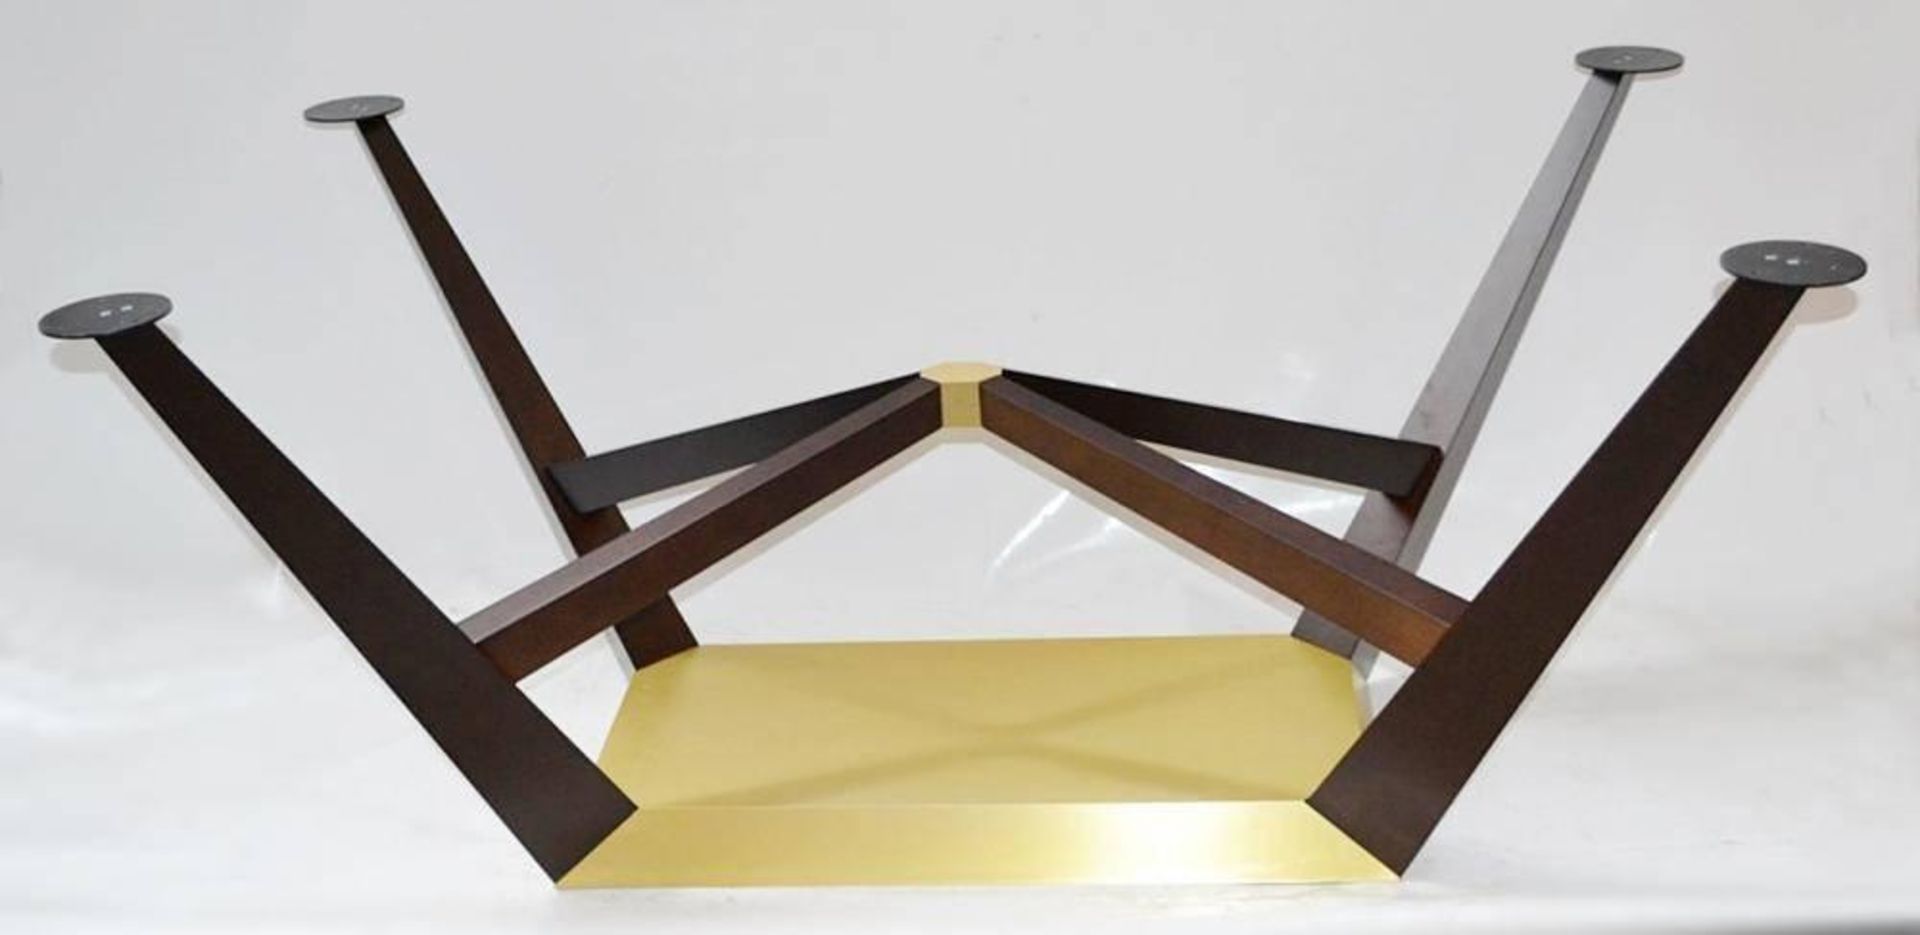 1 x PORADA Ellington Dining Table - 2.2 Metres In Length - Original RRP £7,495 - Image 4 of 12